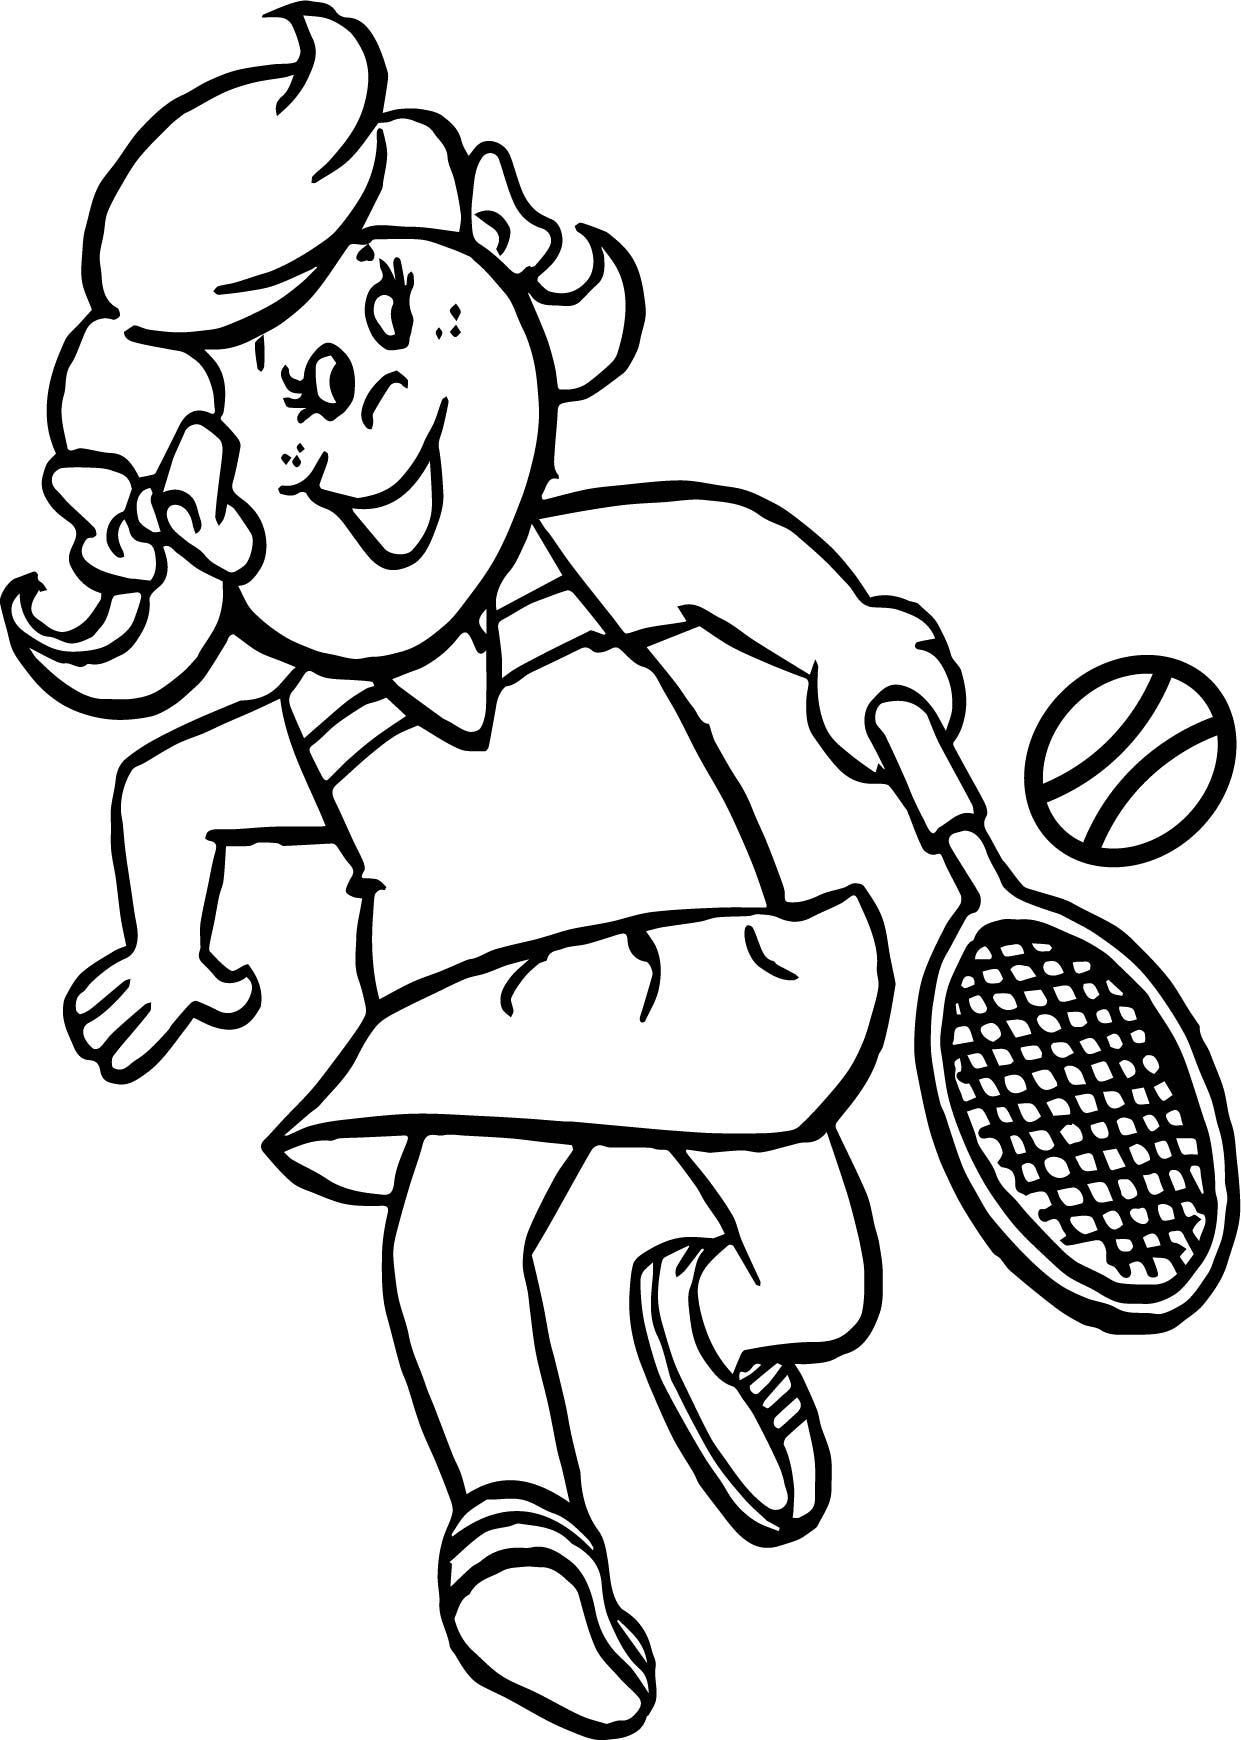 Nina grande jugar al tenis dibujos para colorear - Niña grande, jugar al tenis dibujos para colorear